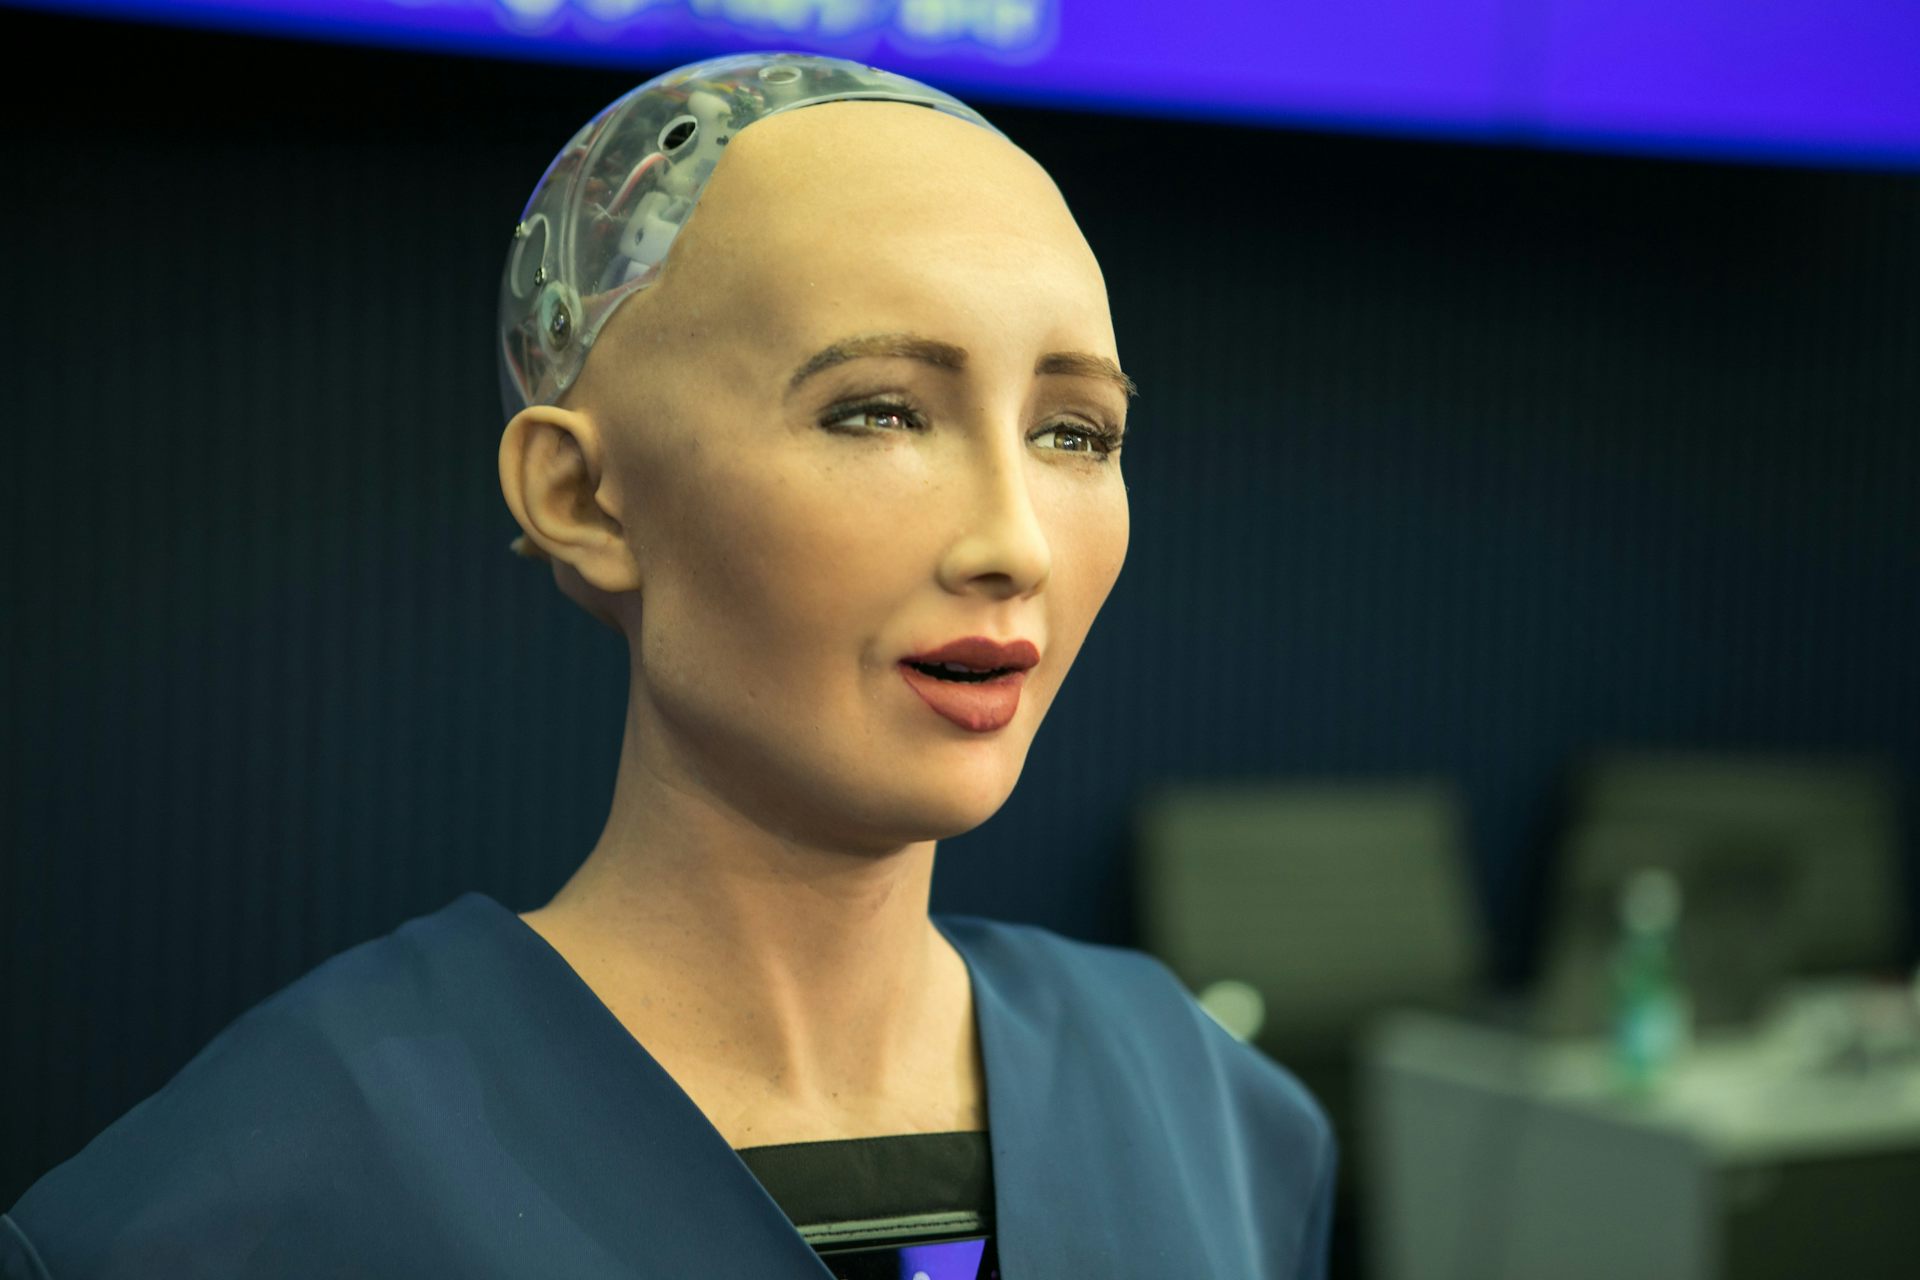 robot artificial intelligence sophia